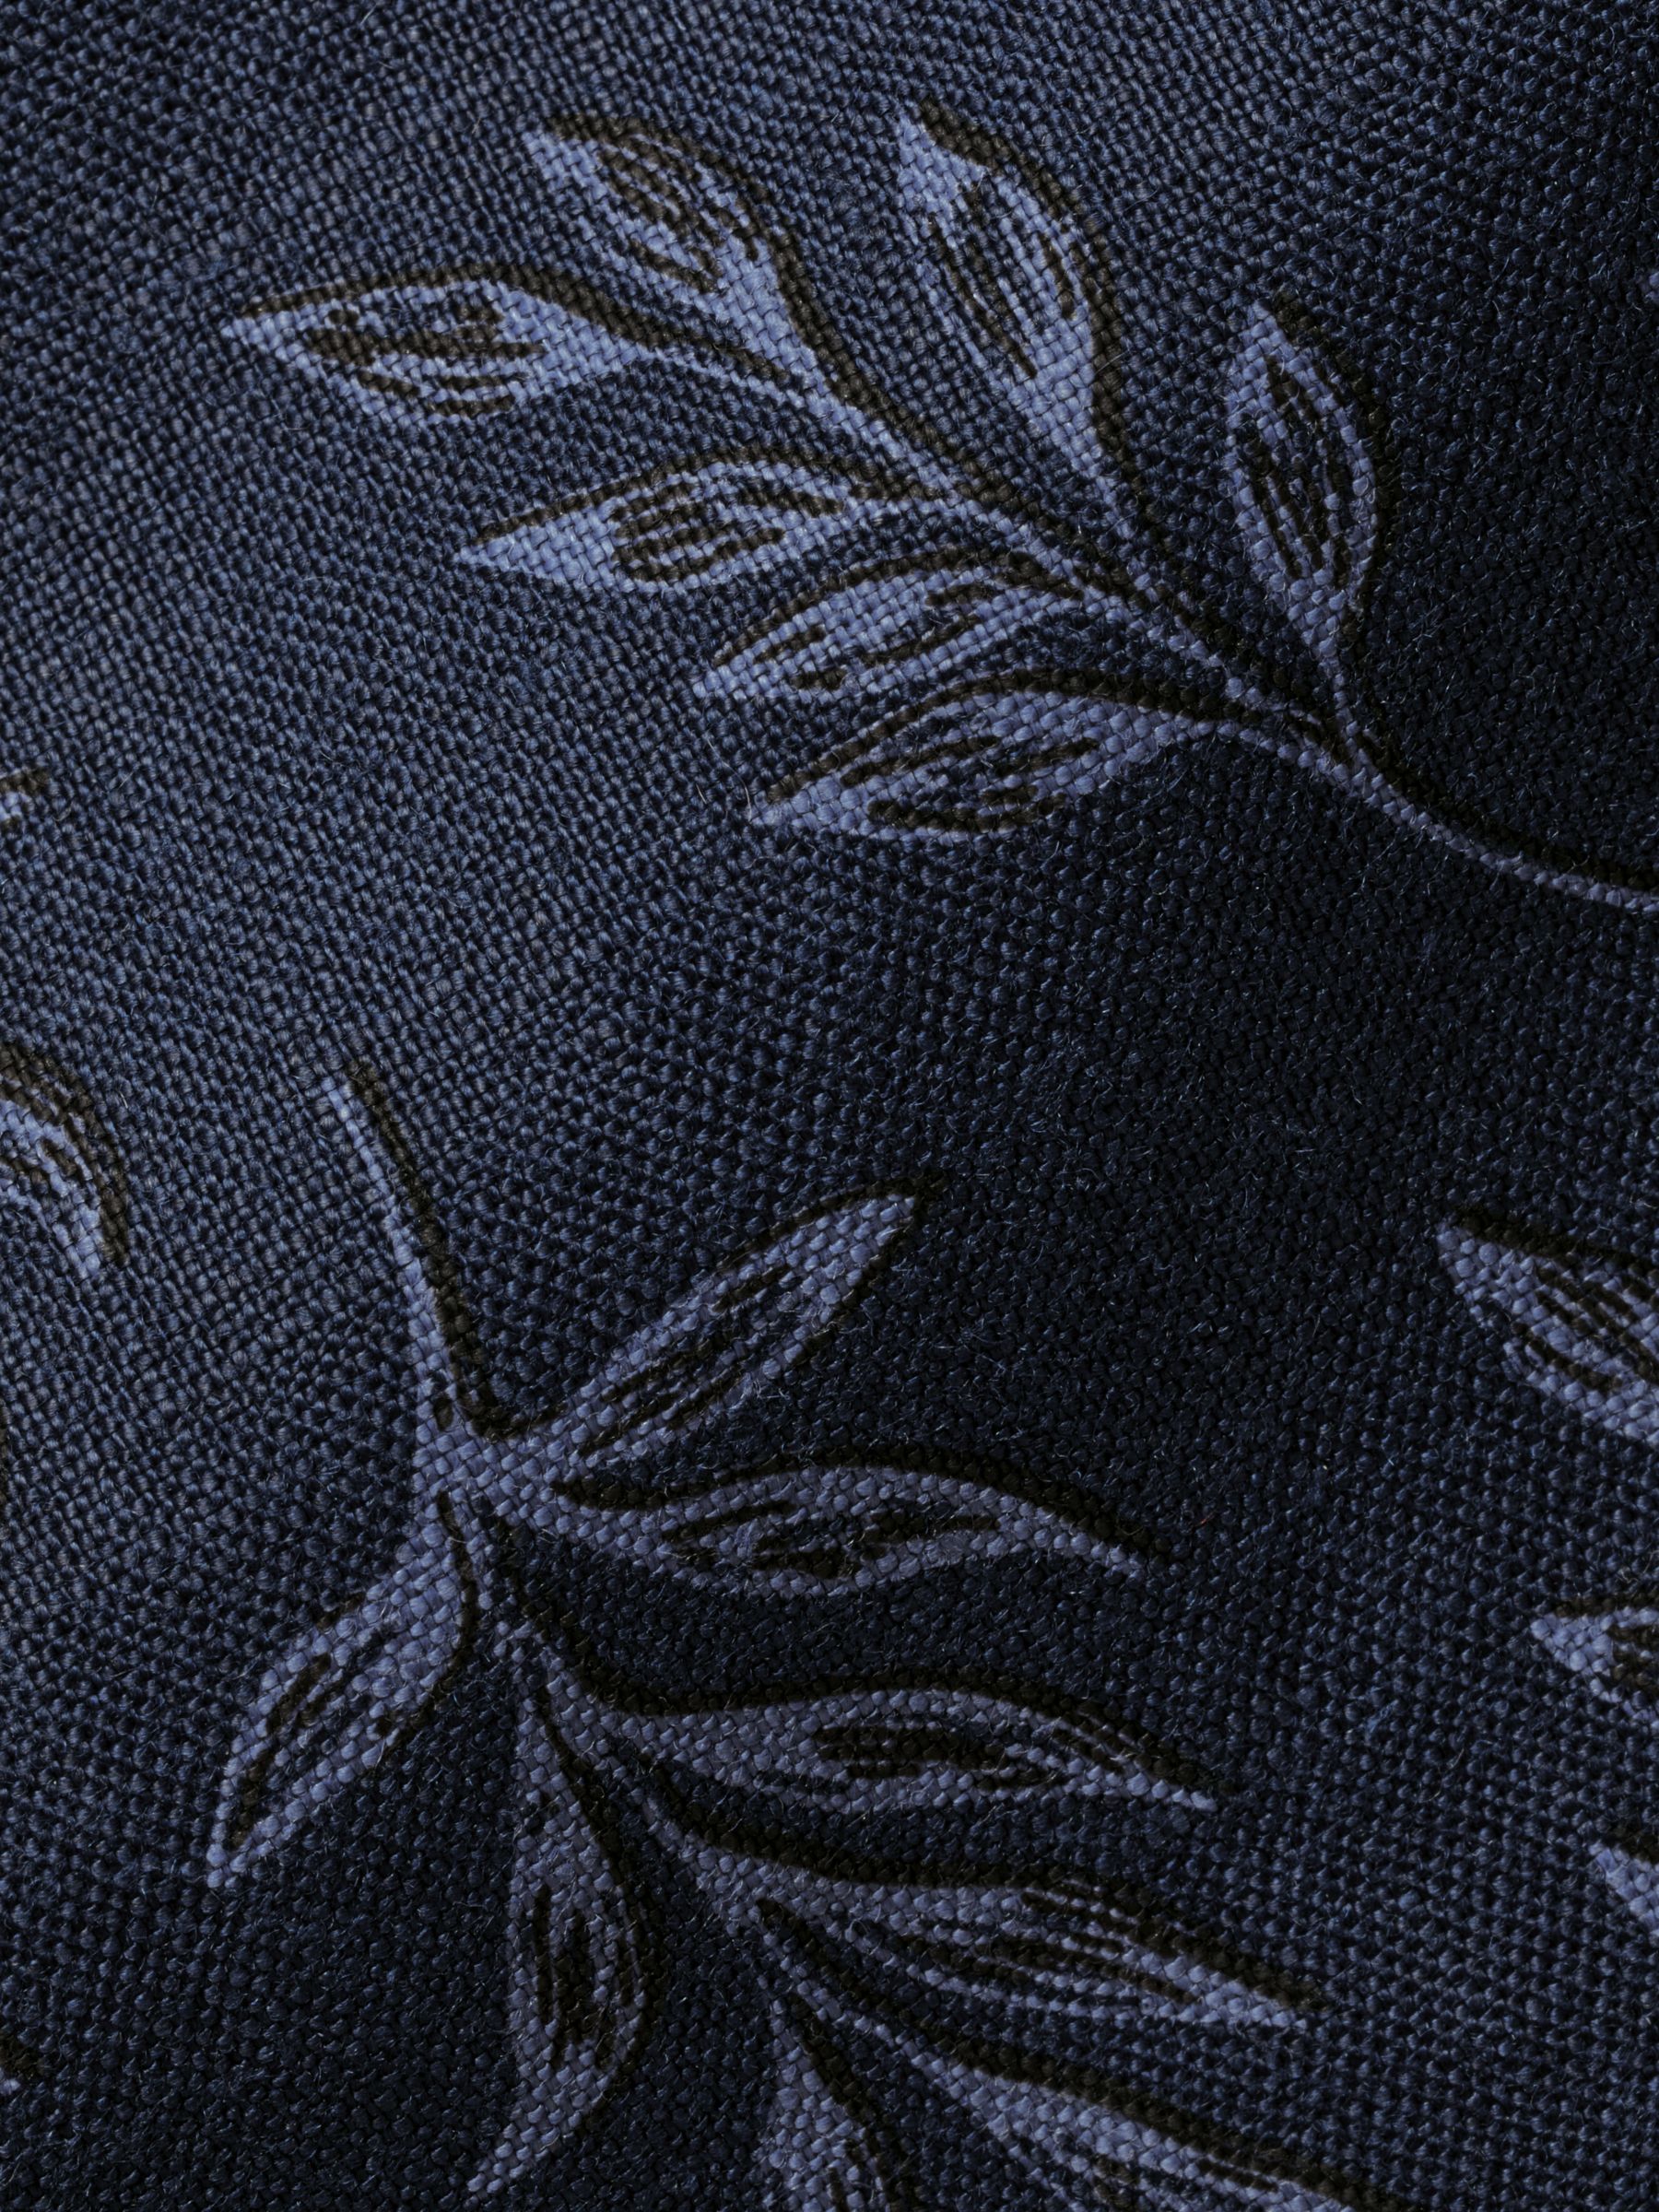 Charles Tyrwhitt Linen Classic Fit Leaf Print Short Sleeve Shirt, Indigo Blue, M